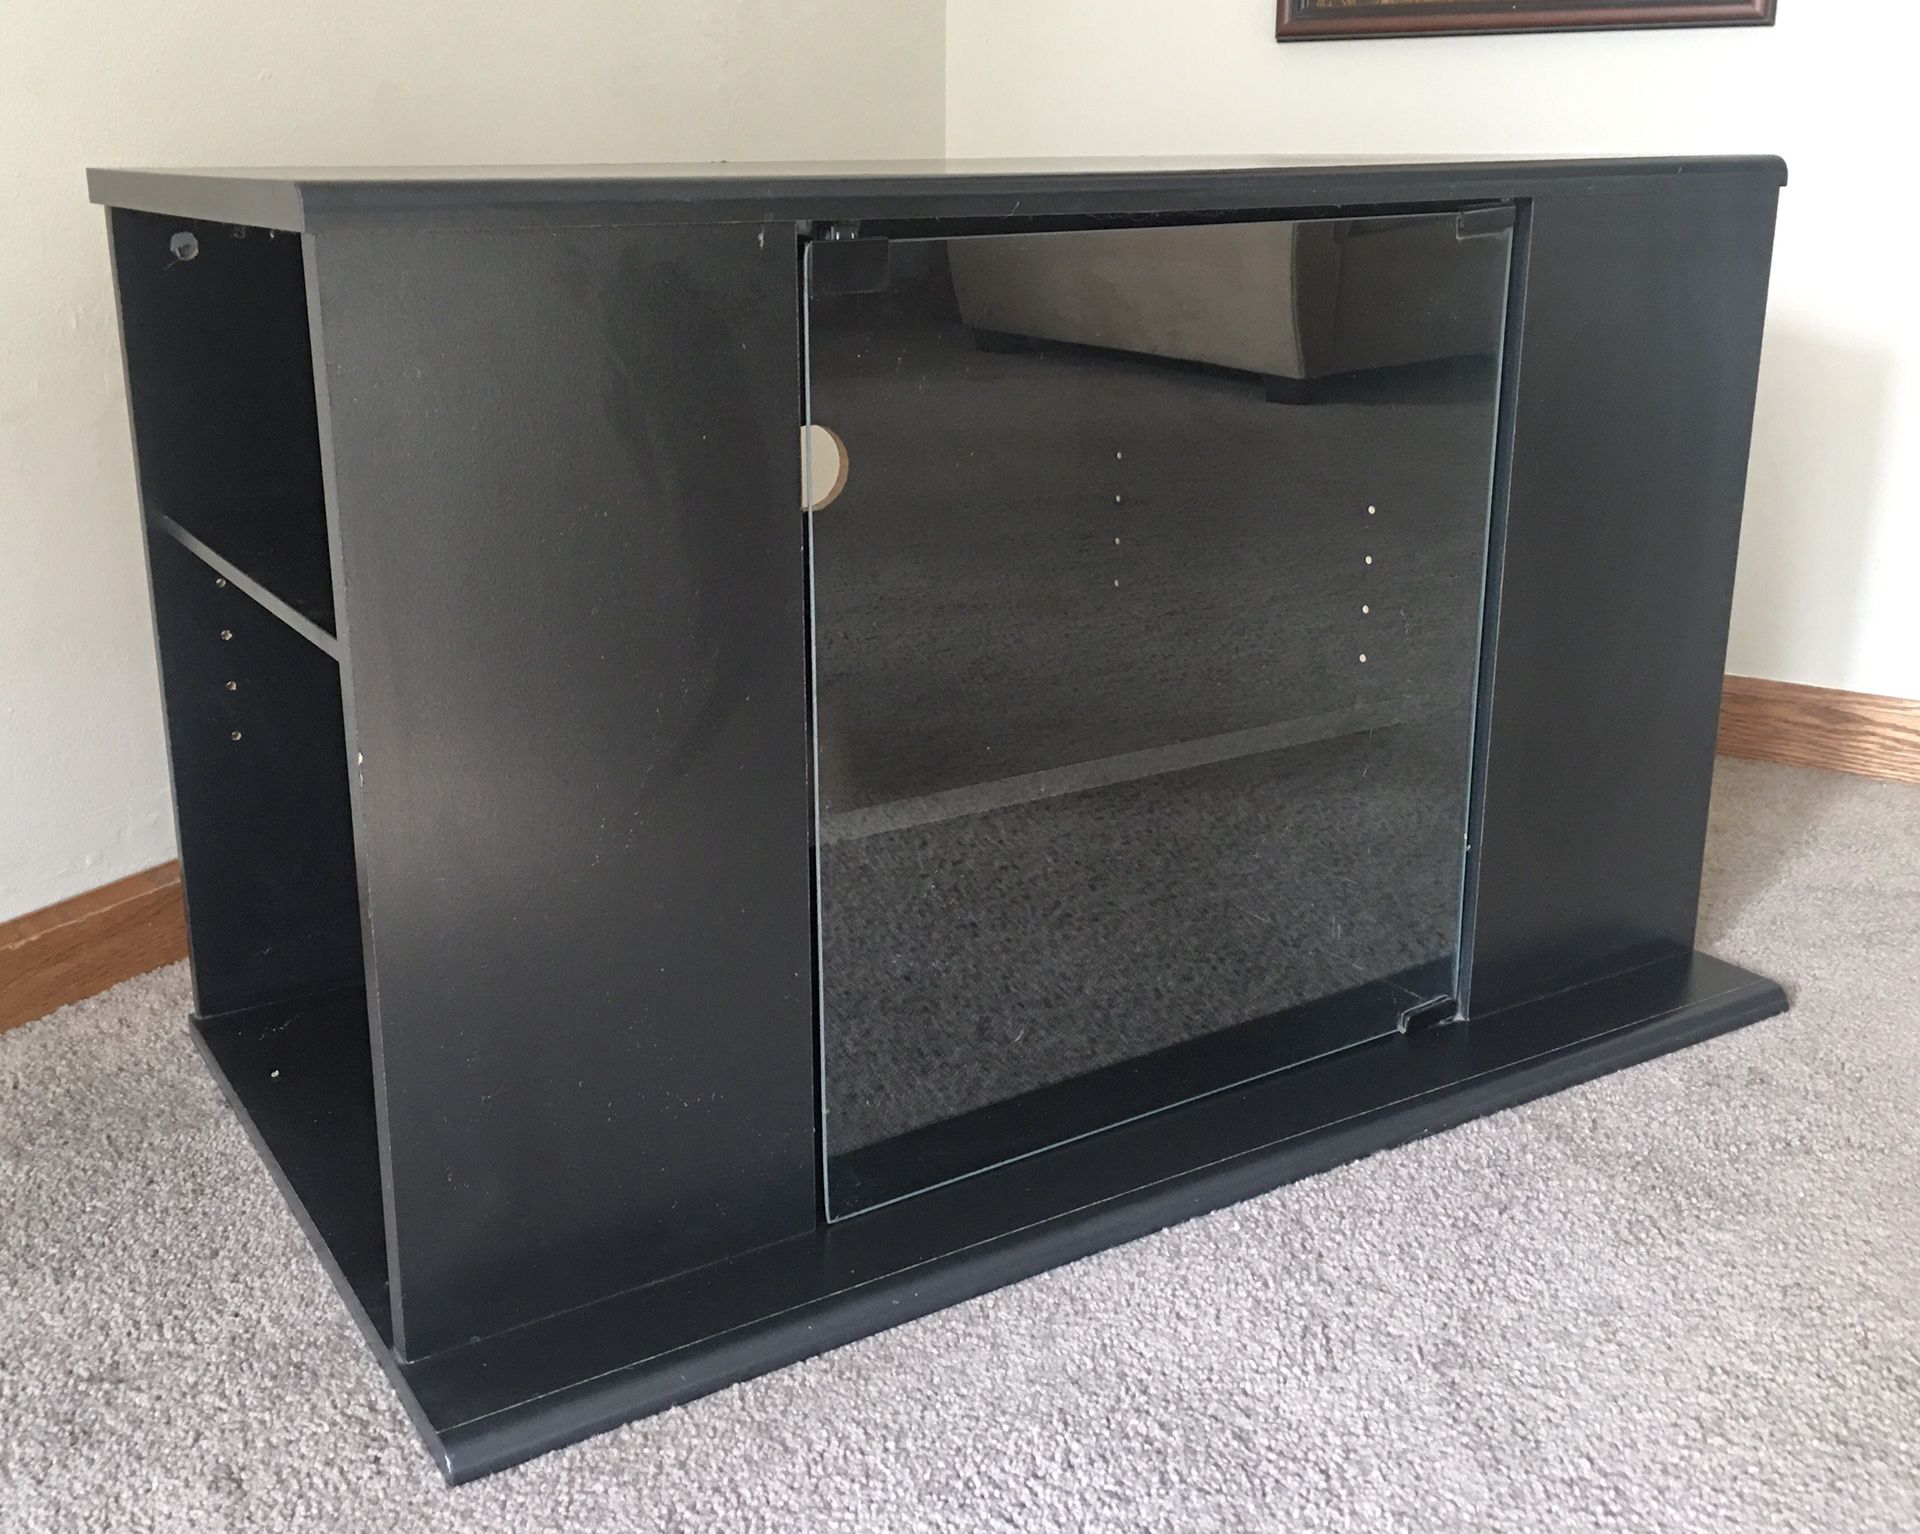 Black TV Stand Excellent Condition Media Storage